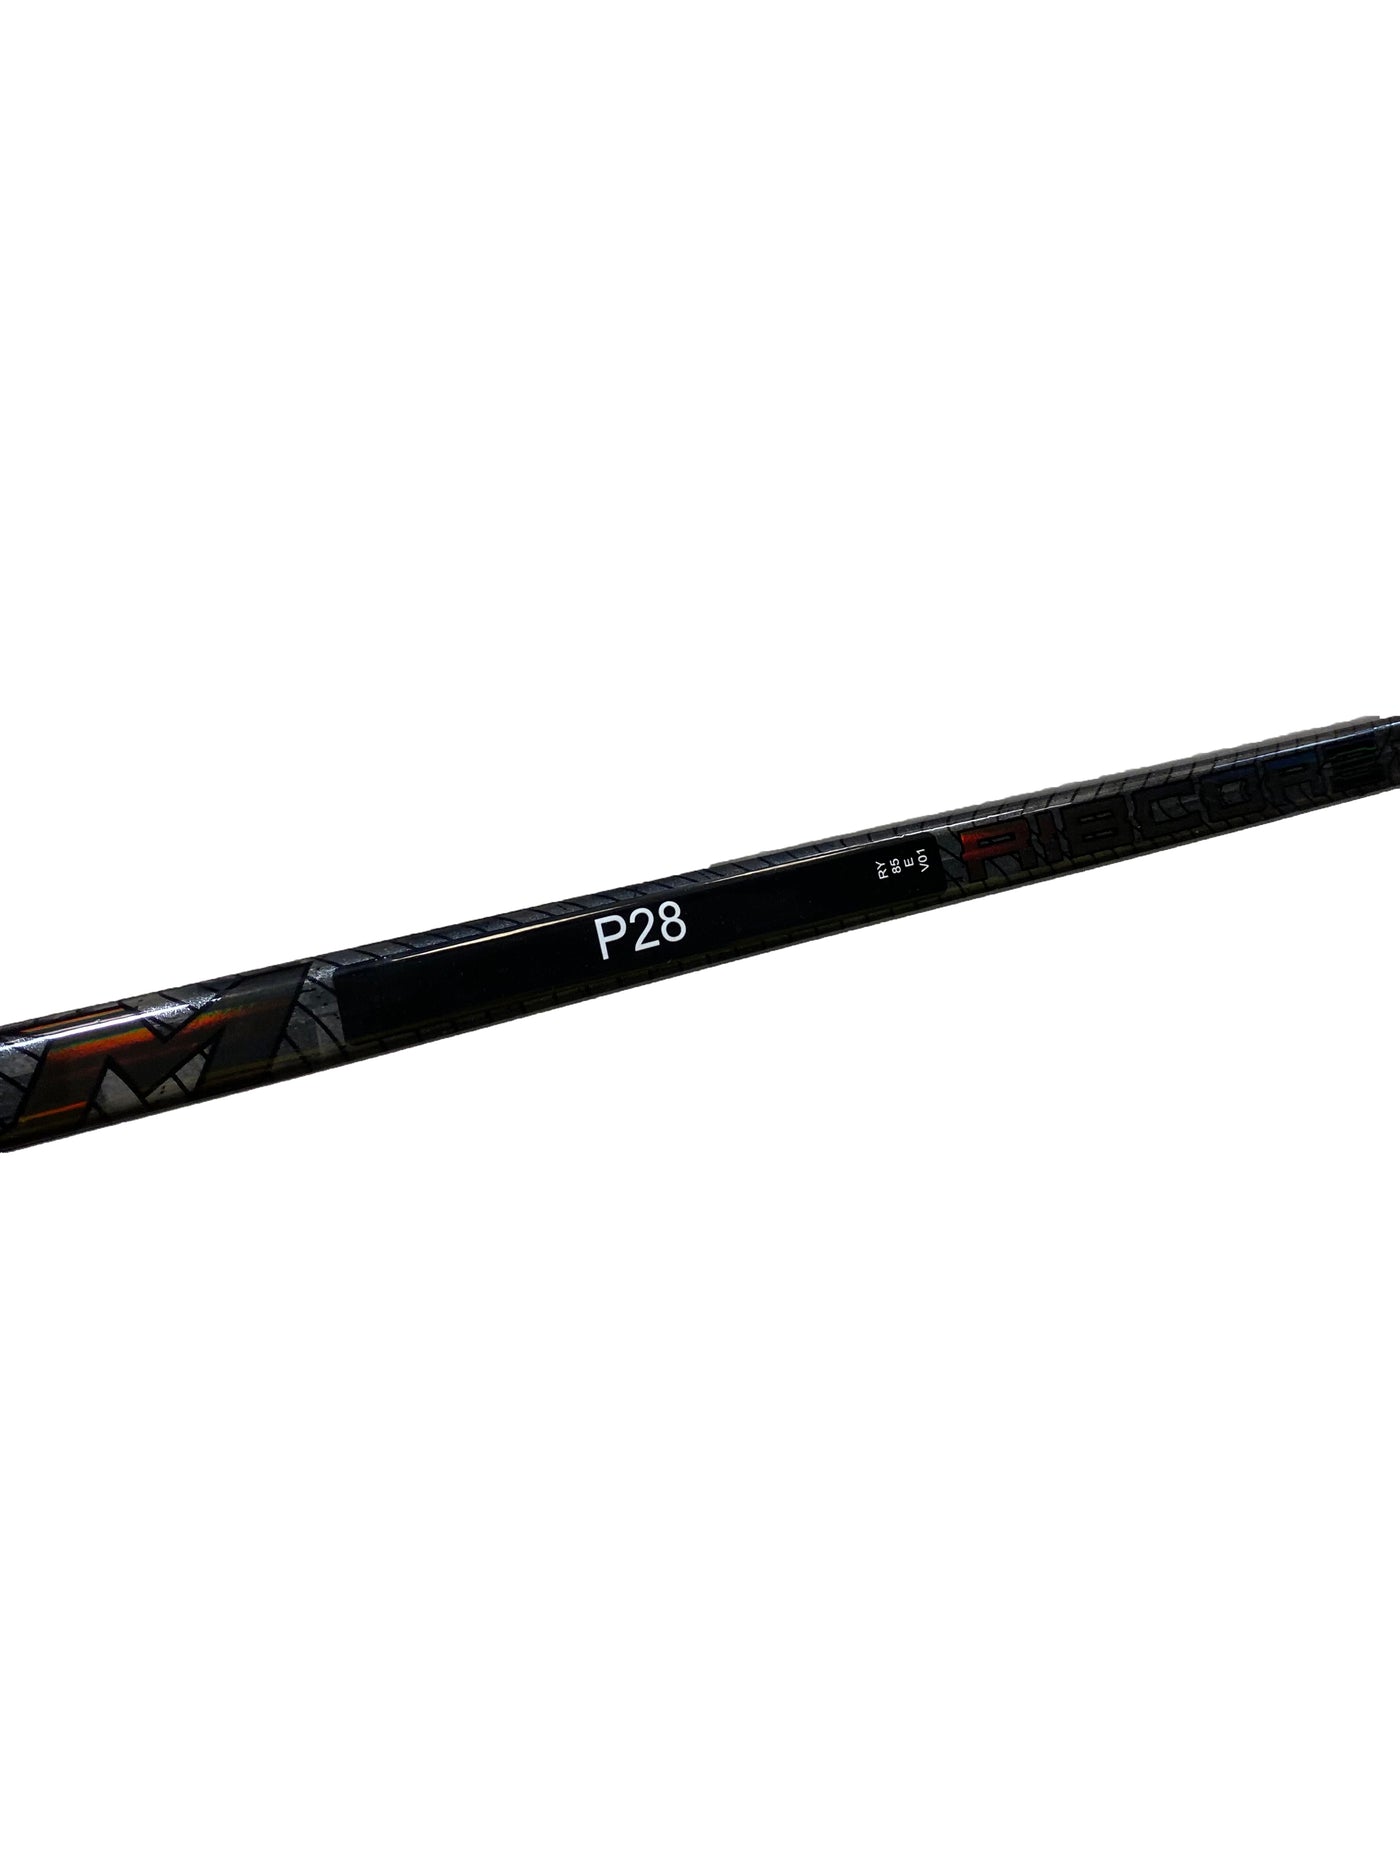 CCM Ribcore Trigger 6 Pro - Pro Stock Hockey Stick - P28